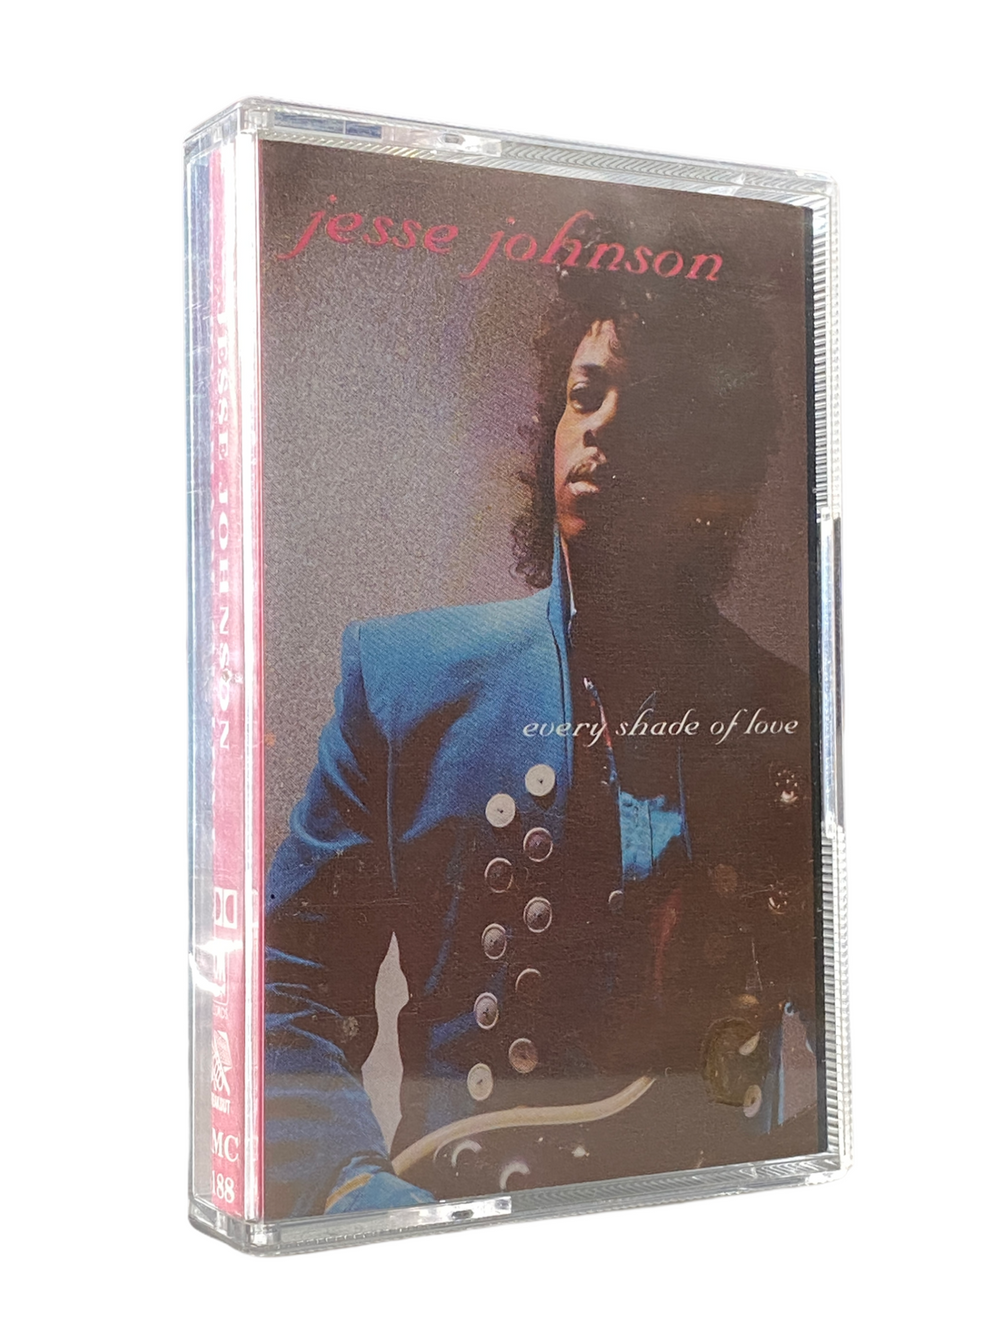 Prince – Prince – Jesse Johnson Every Shade Of Love Cassette Album Preloved: 1988